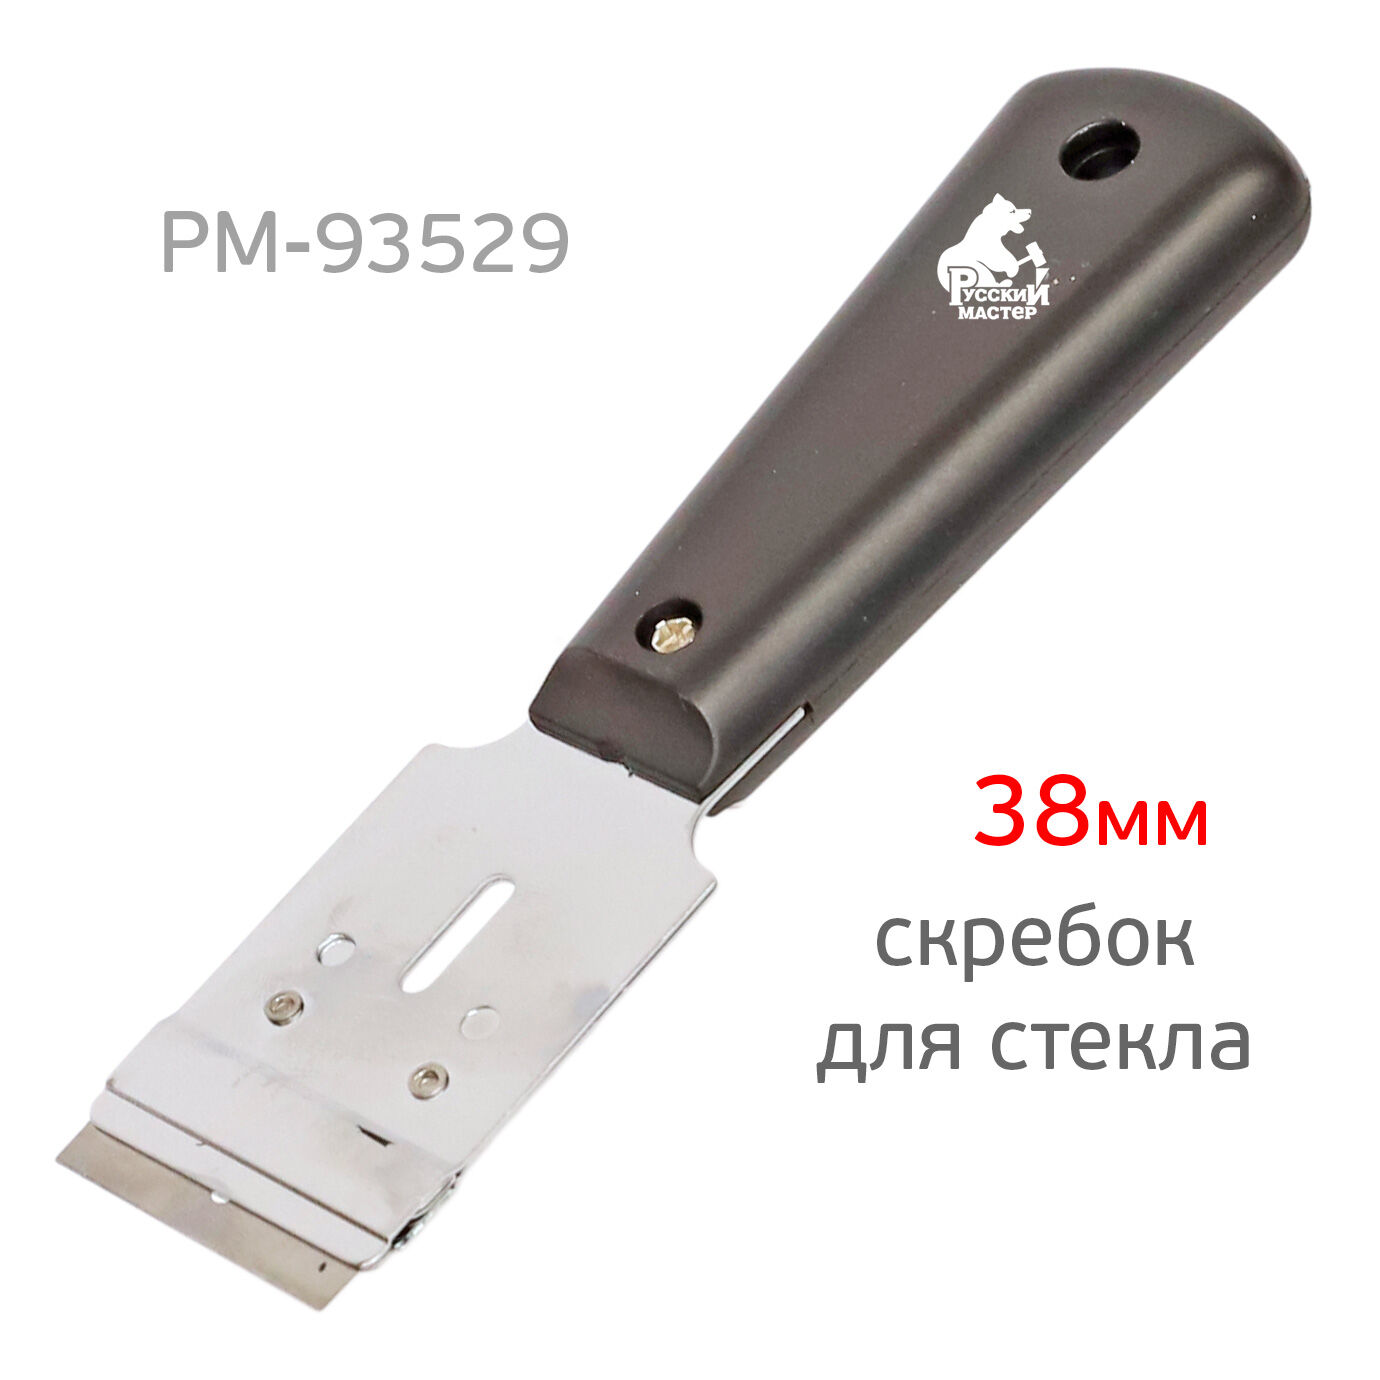 Шабер для стекла РМ-93529 Русский Мастер (38мм) 2